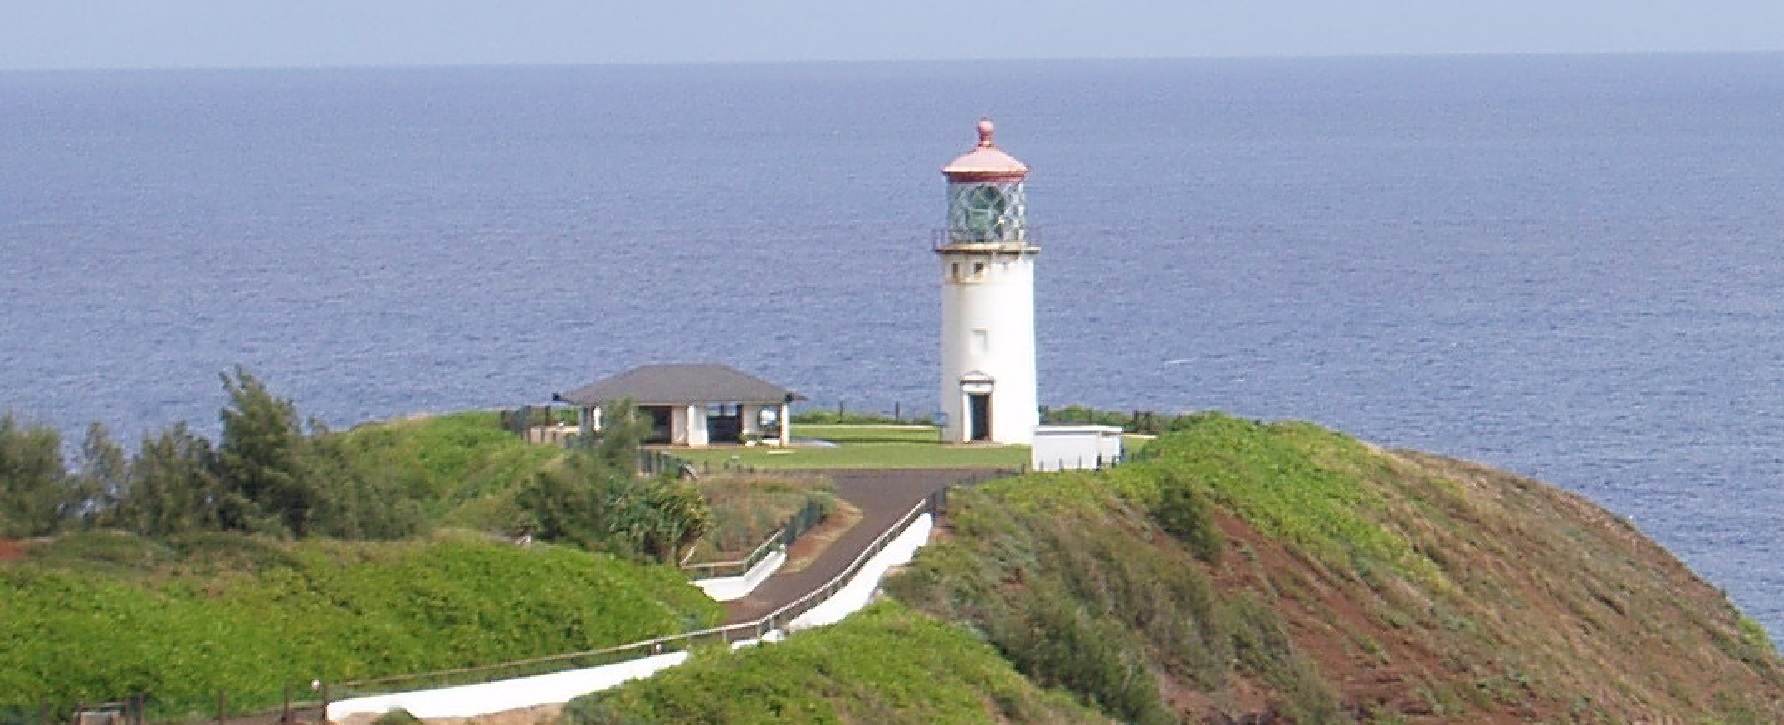 Hawaii lighthouse